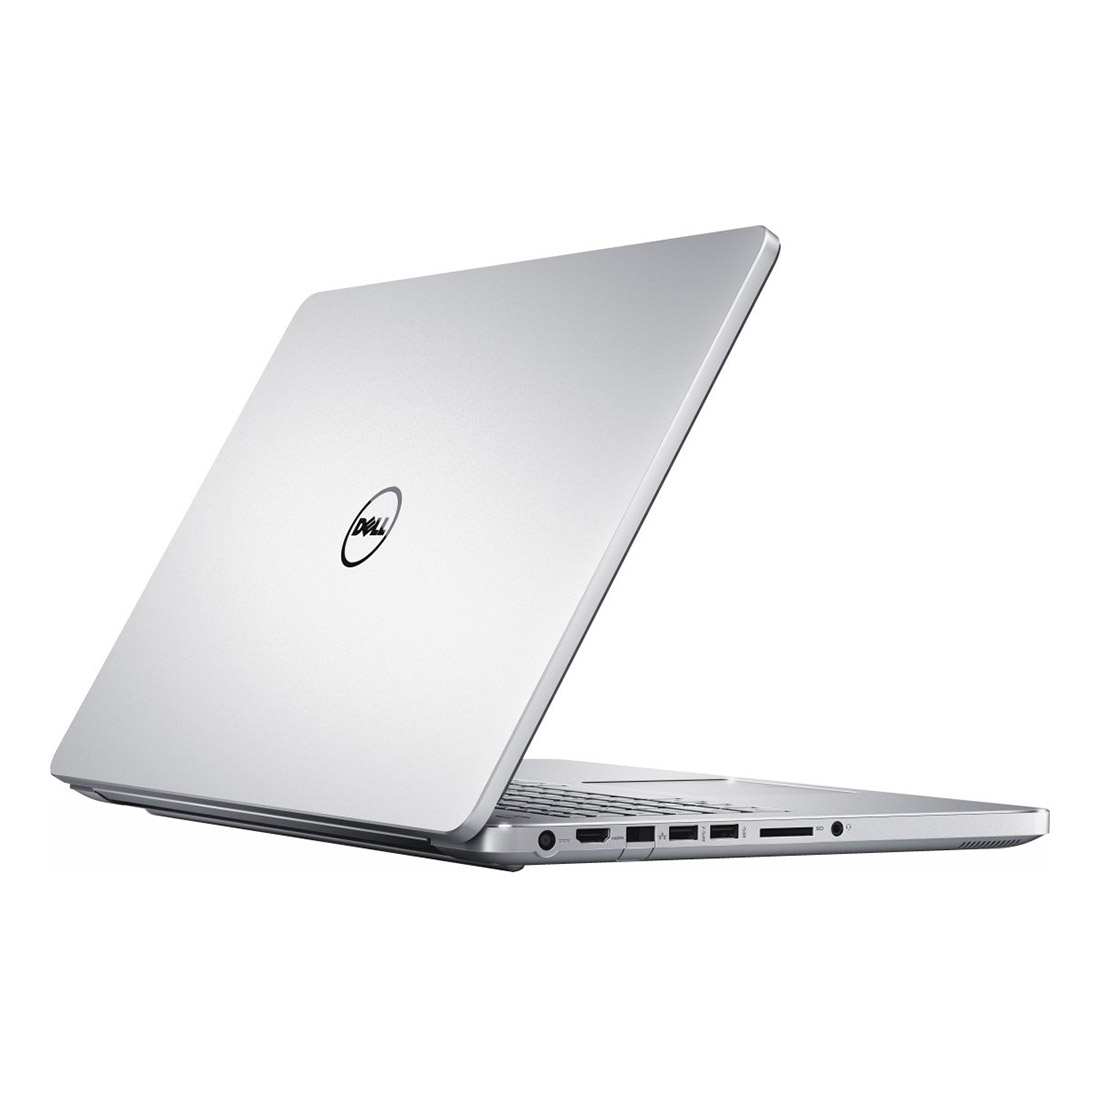 Ноутбук Dell Inspiron 7737 (Core i7-4510U/17.3"/8Gb/1Tb/GT750M 2Gb/DVD-RW) (7737-3005) + Win8 Pro Сатурн #2